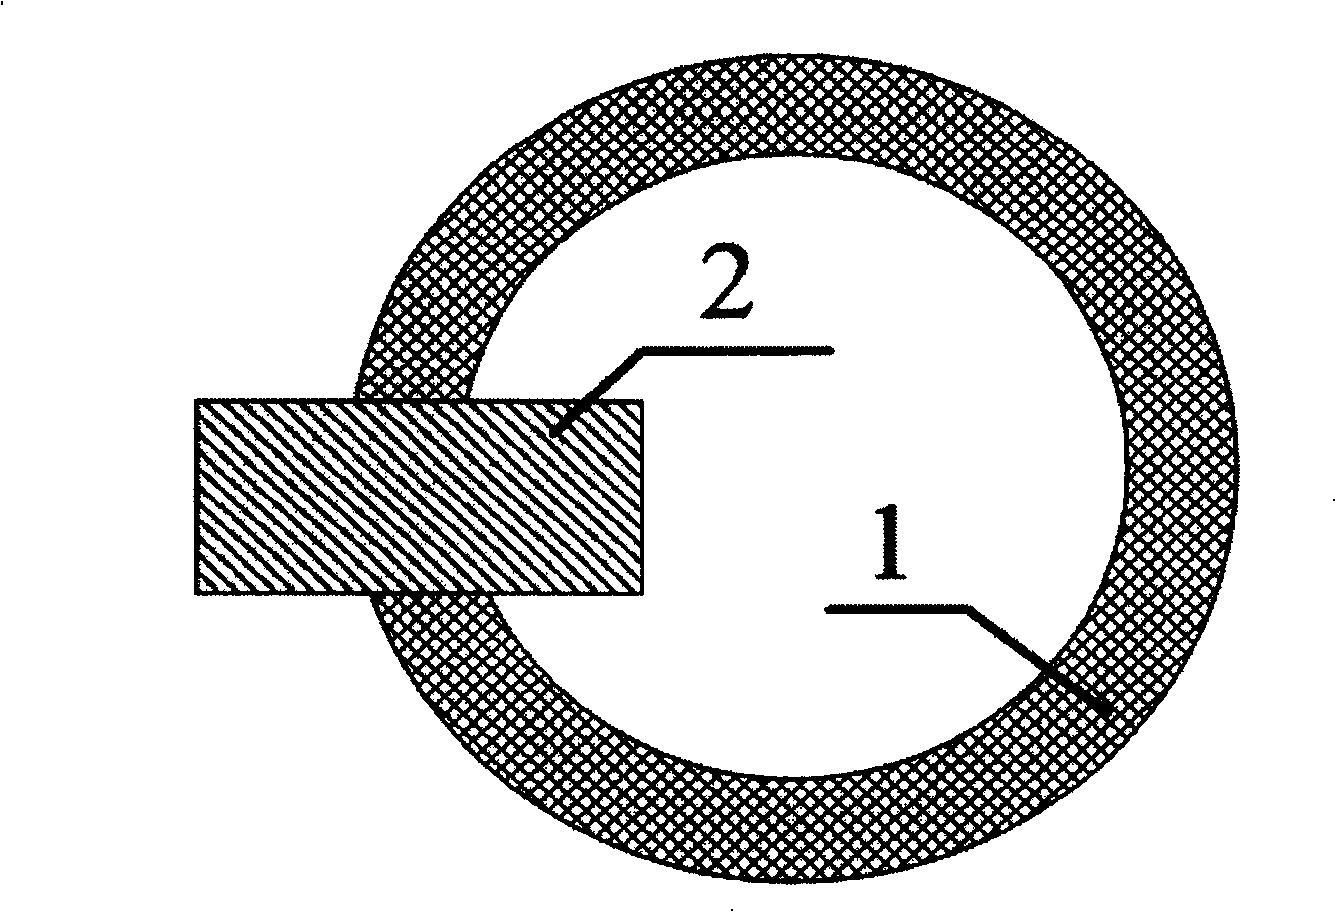 Self-resonance structure based on open hole resonance loop